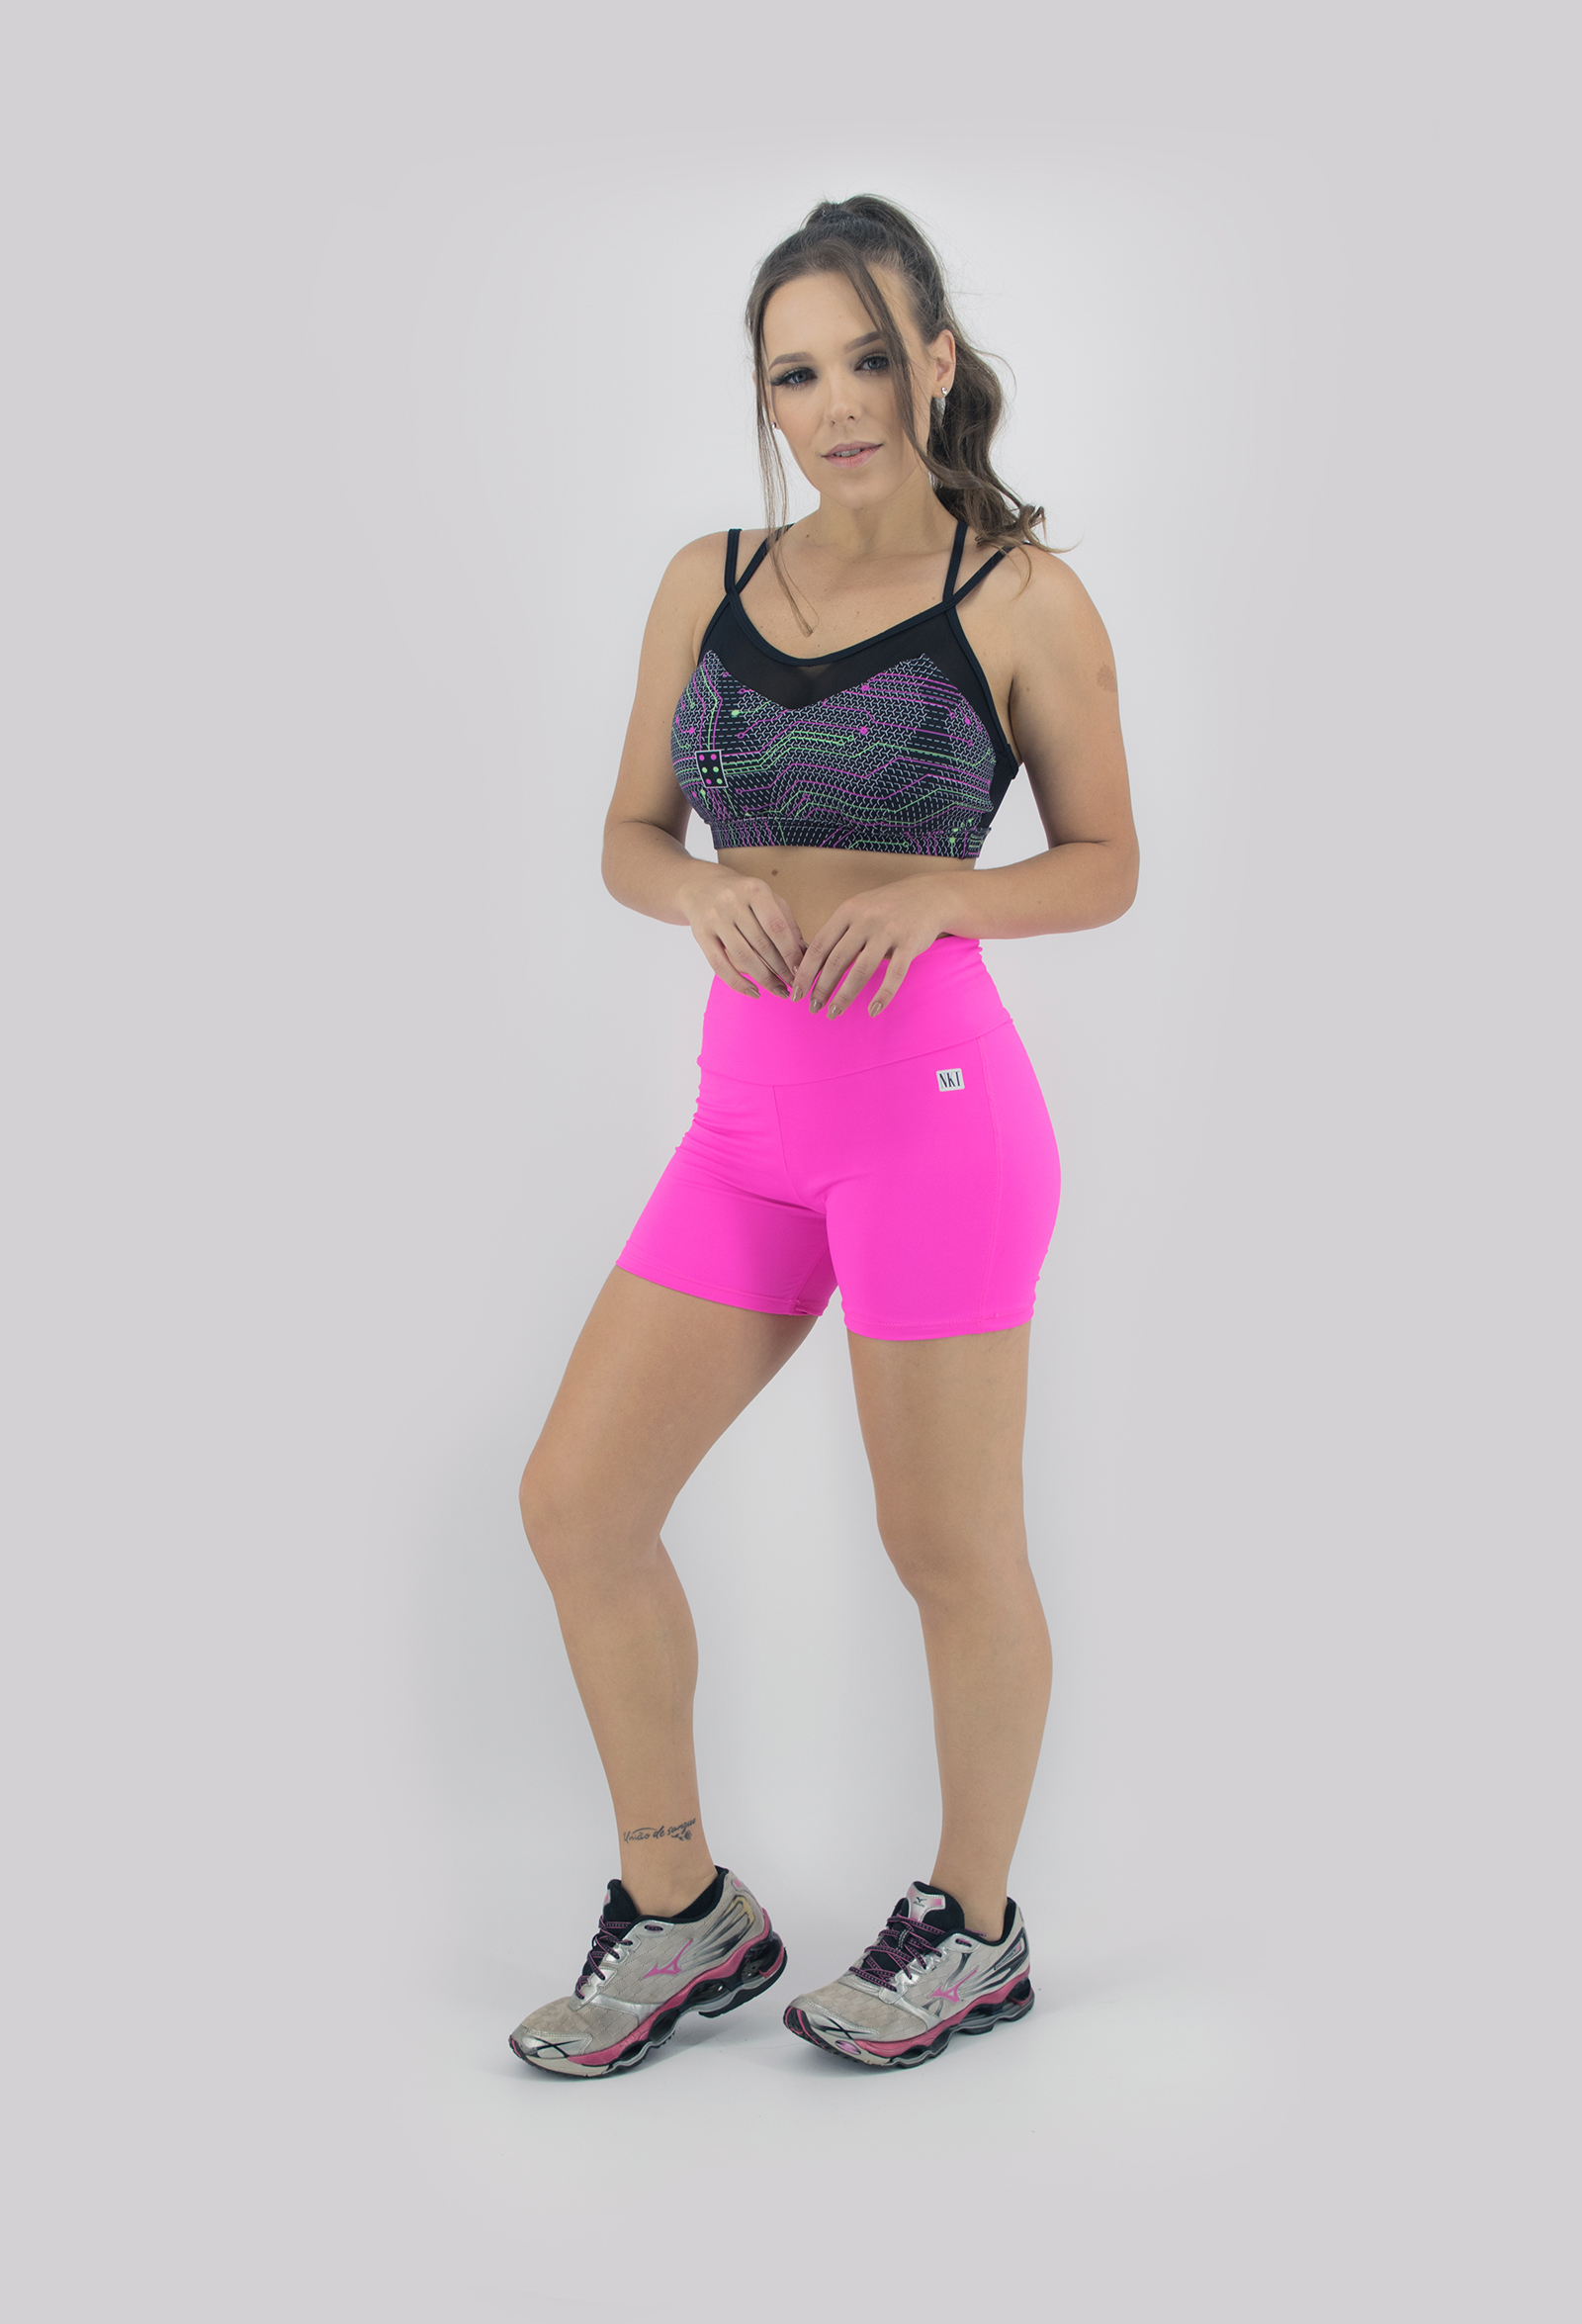 Top Best, Coleção Move Your Body - NKT Fitwear Moda Fitness